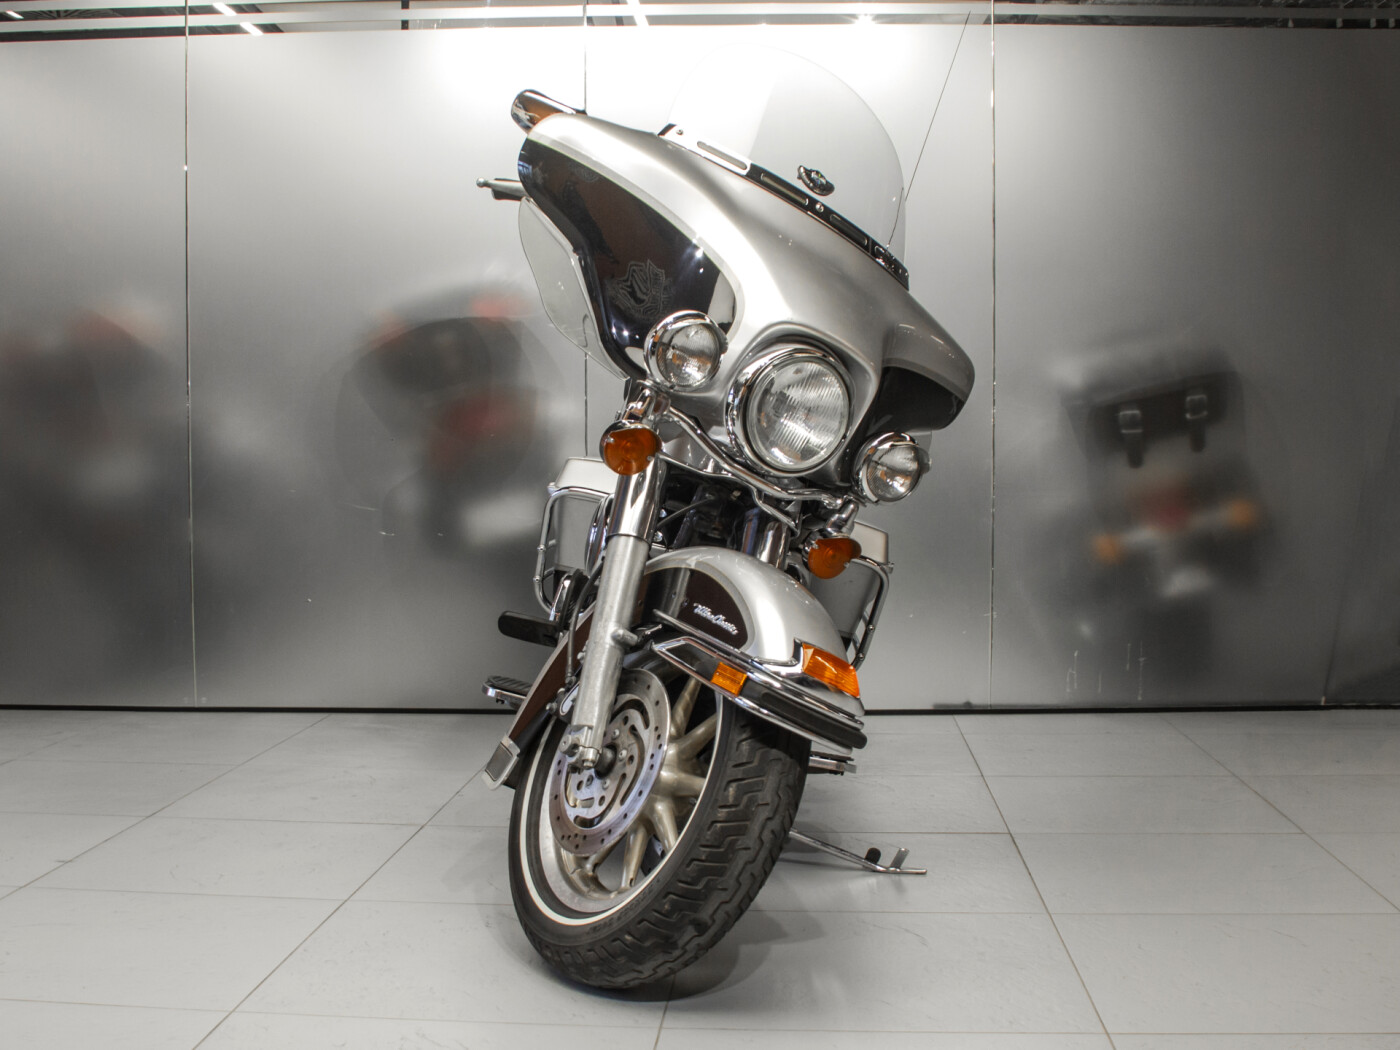 Harley-Davidson Electra Glide FLHTCUI #8335